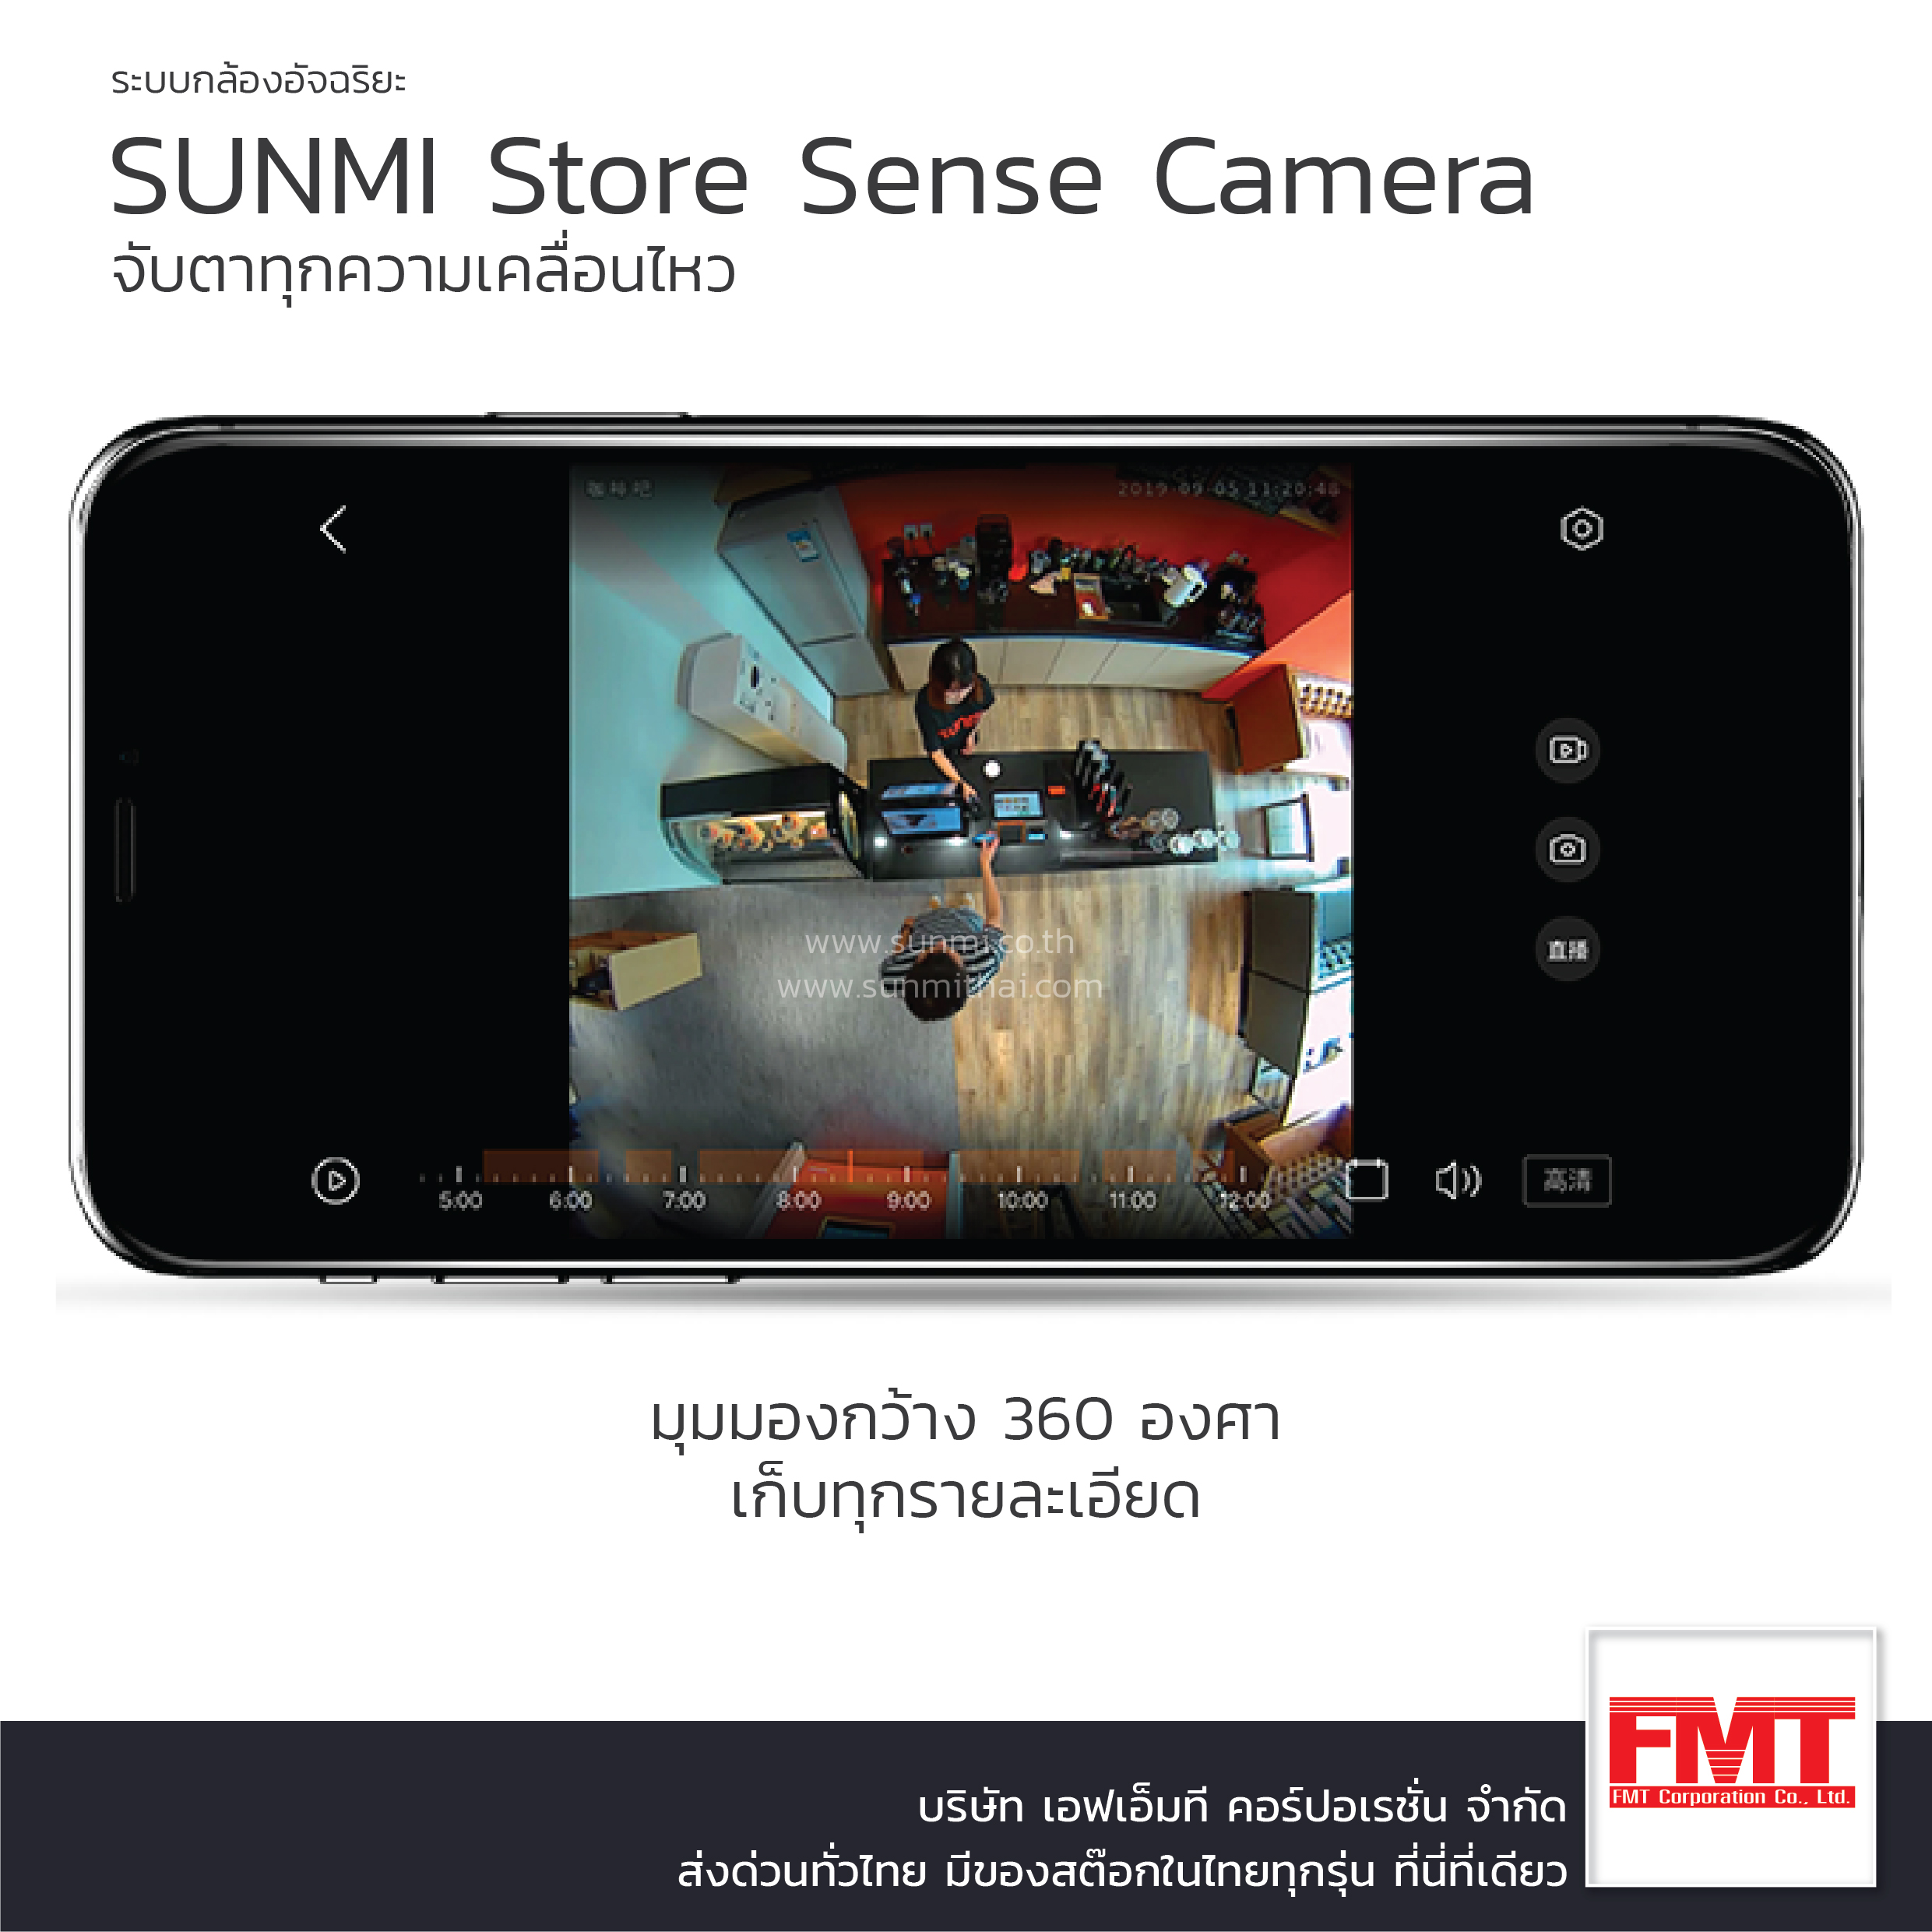 SUNMI Store Sense Camera